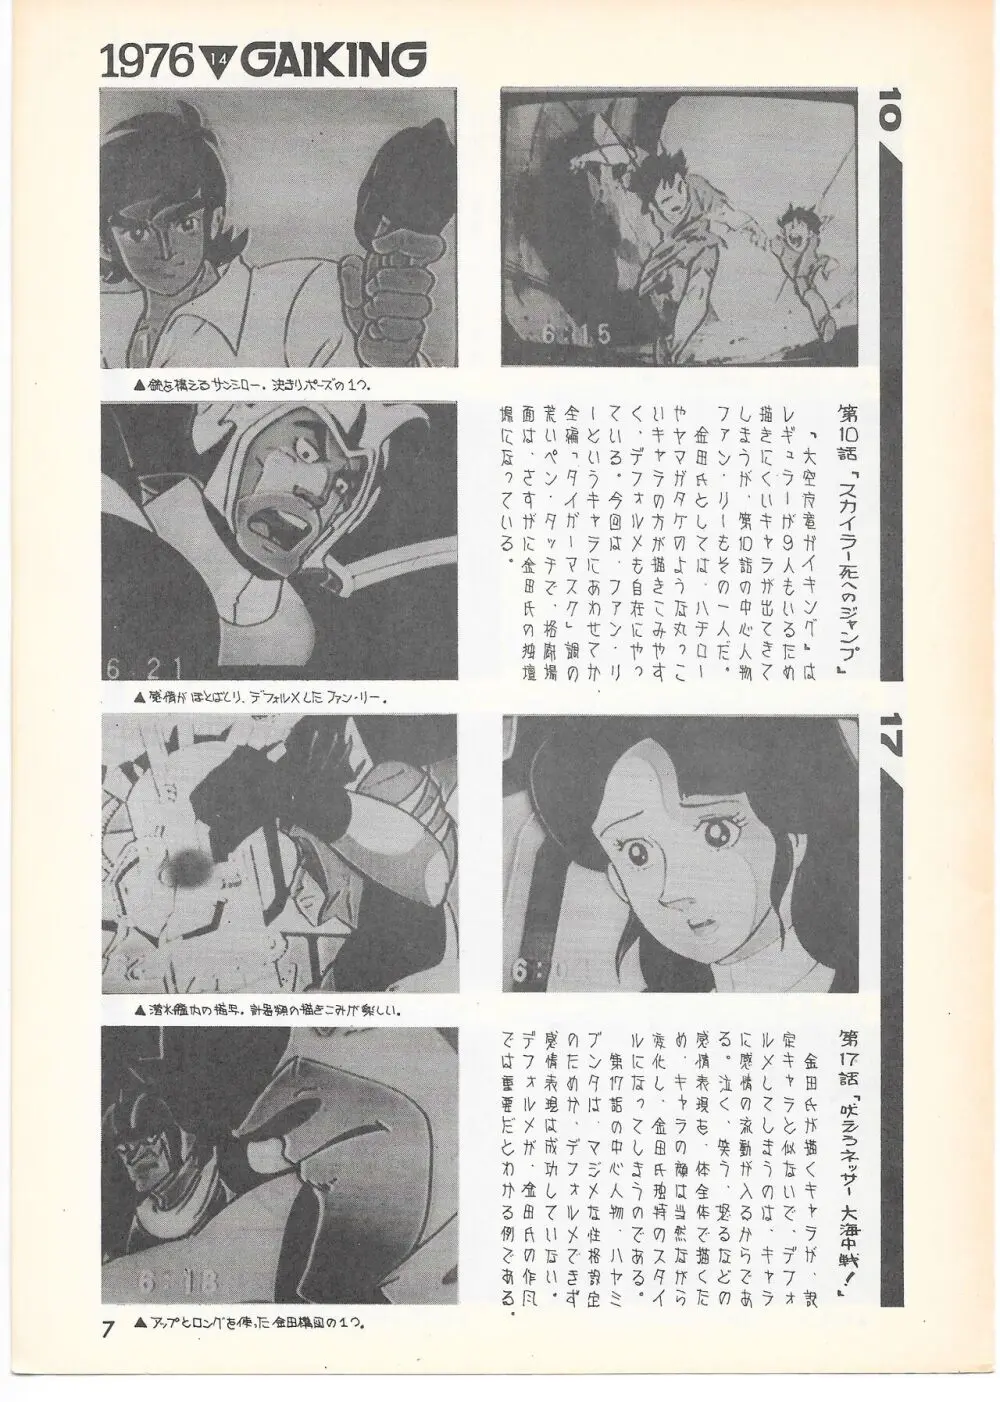 THE ANIMATOR 1 金田伊功特集号 - page6